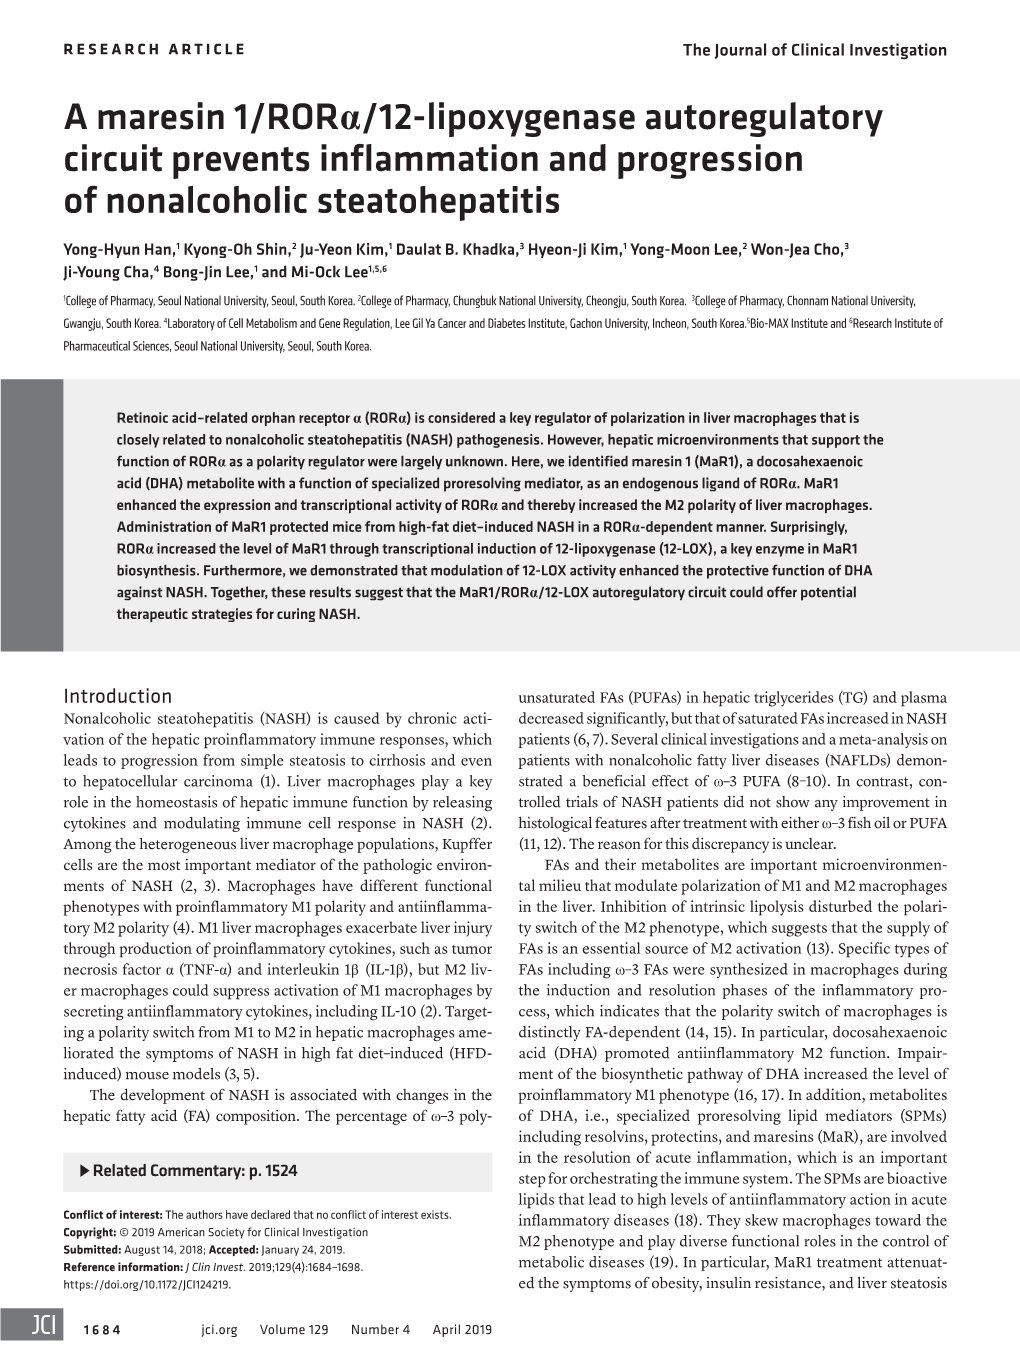 A Maresin 1/Rorα/12-Lipoxygenase Autoregulatory Circuit Prevents Inflammation and Progression of Nonalcoholic Steatohepatitis